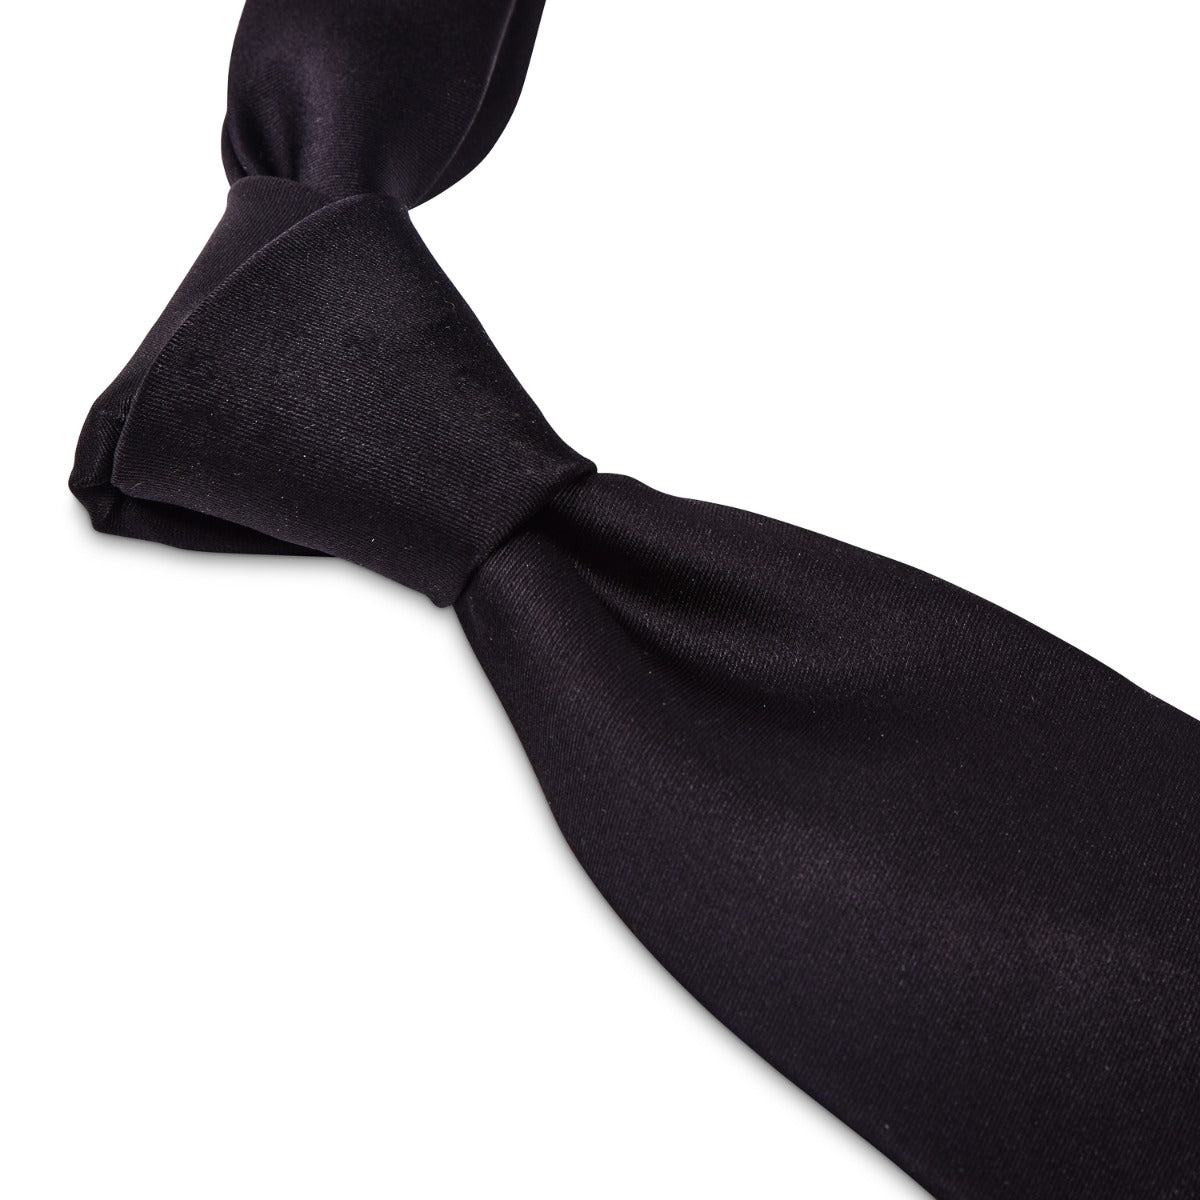 Sovereign Grade Black Solid Satin Tie